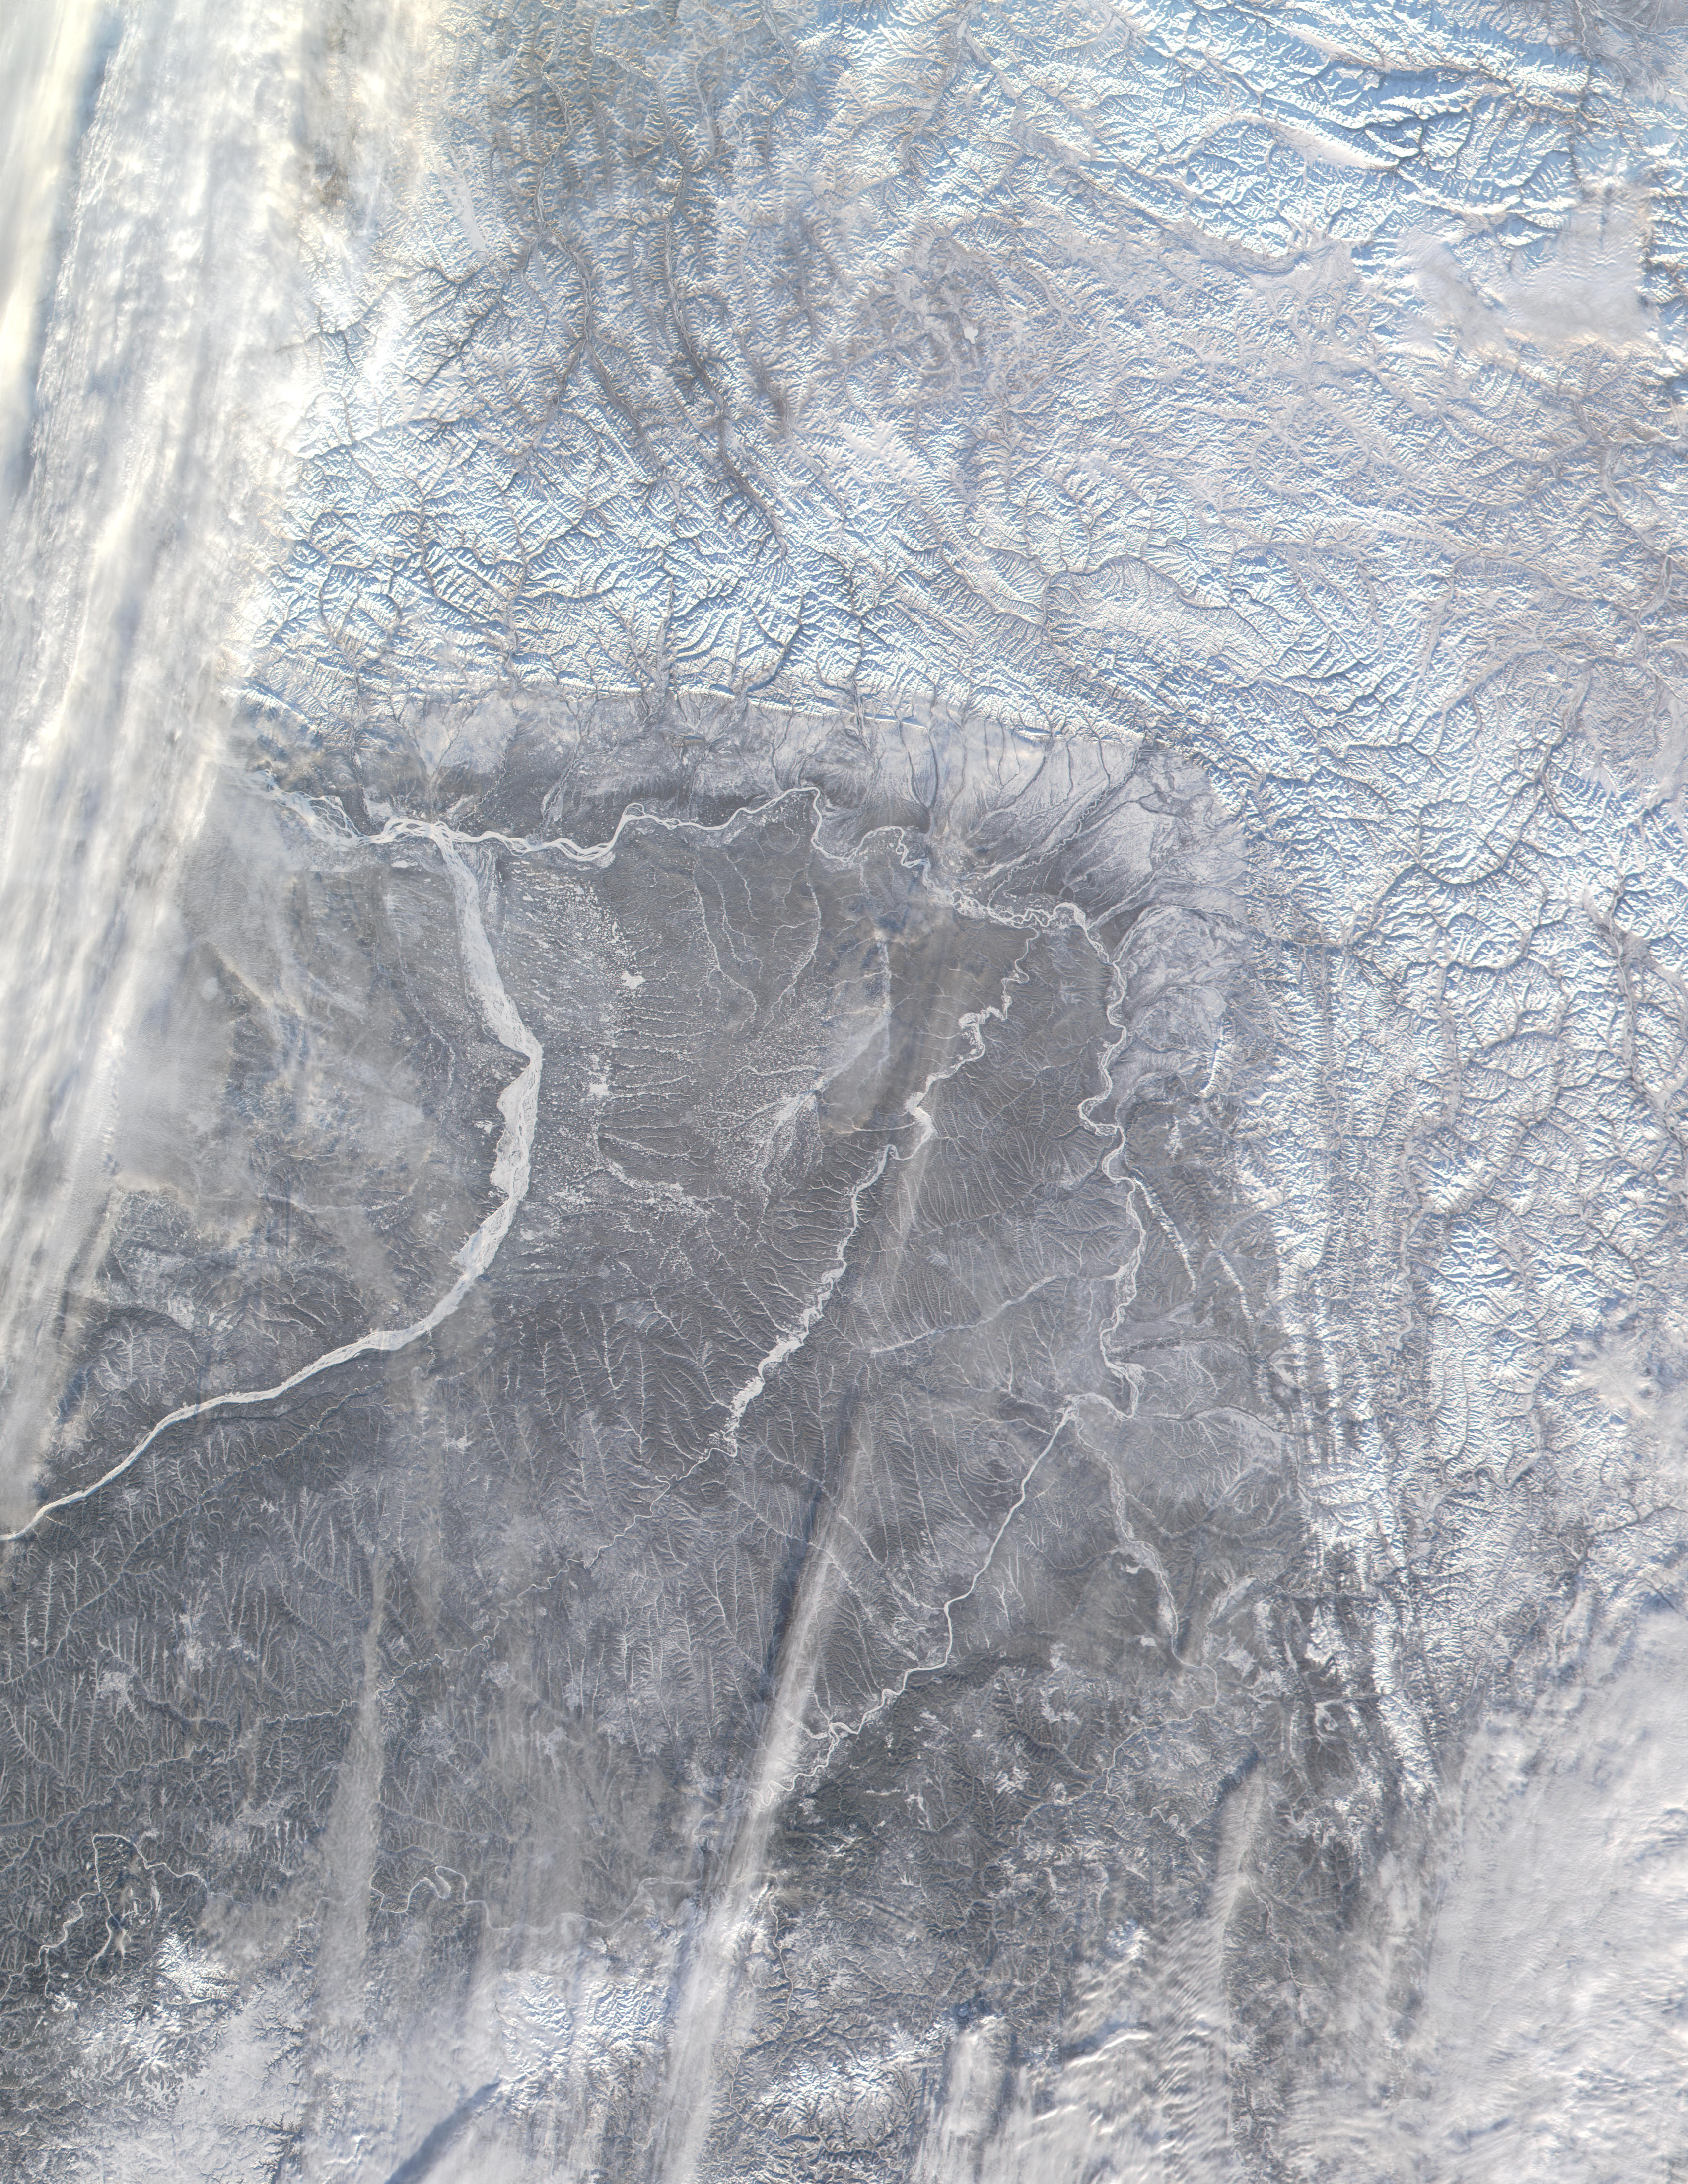 Verkhoyansk Range and Lena River near Yakutsk, Russia - related image preview